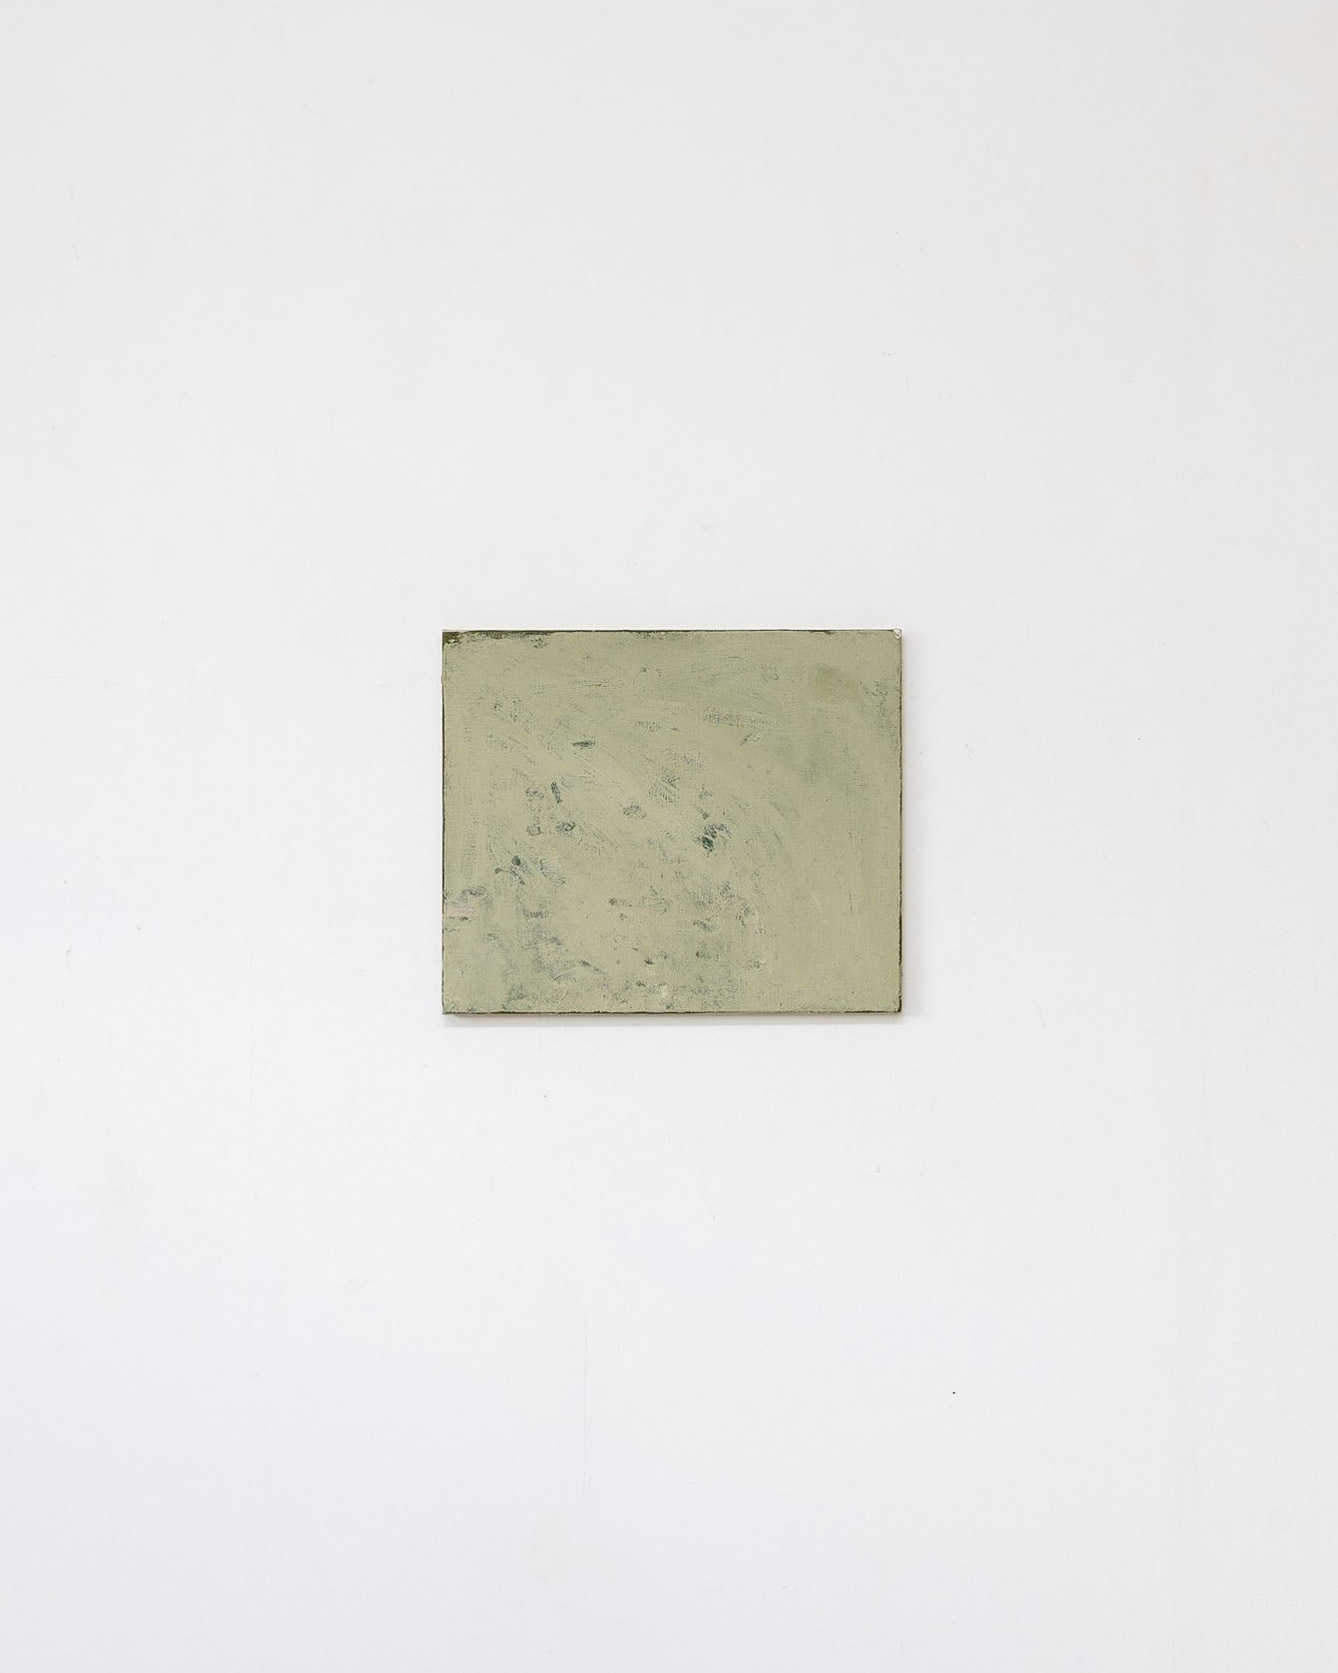 Struan Teague, Untitled, 2021, acrylic, pigment, plaster and glue on linen, 60 x 50 cm © The Artist